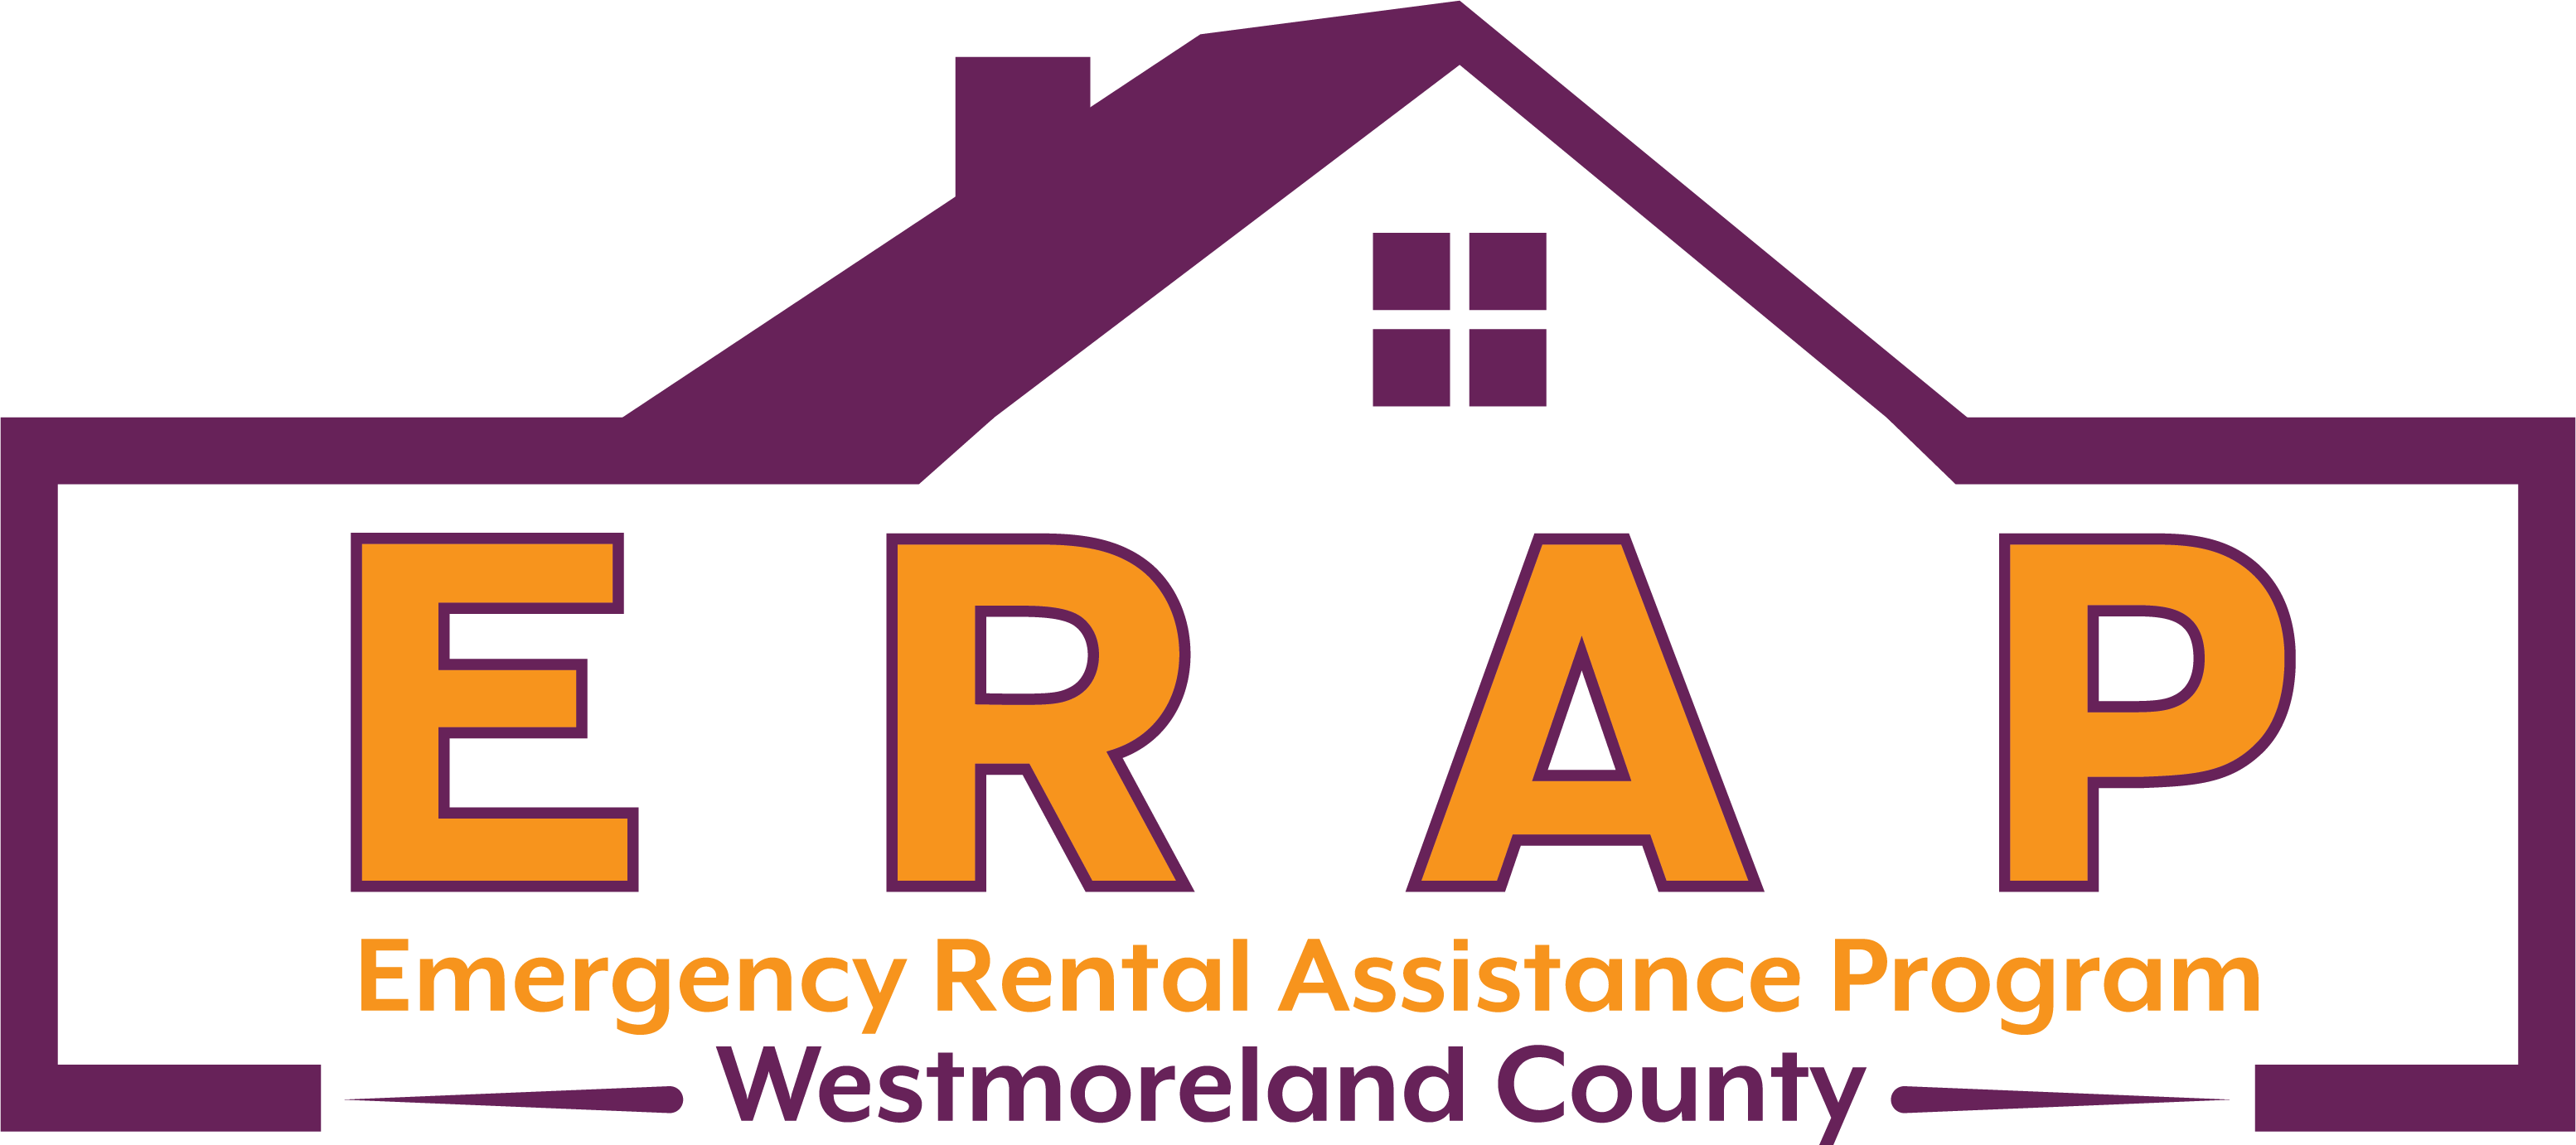 Emergency Rental Assistance Program - Westmoreland County